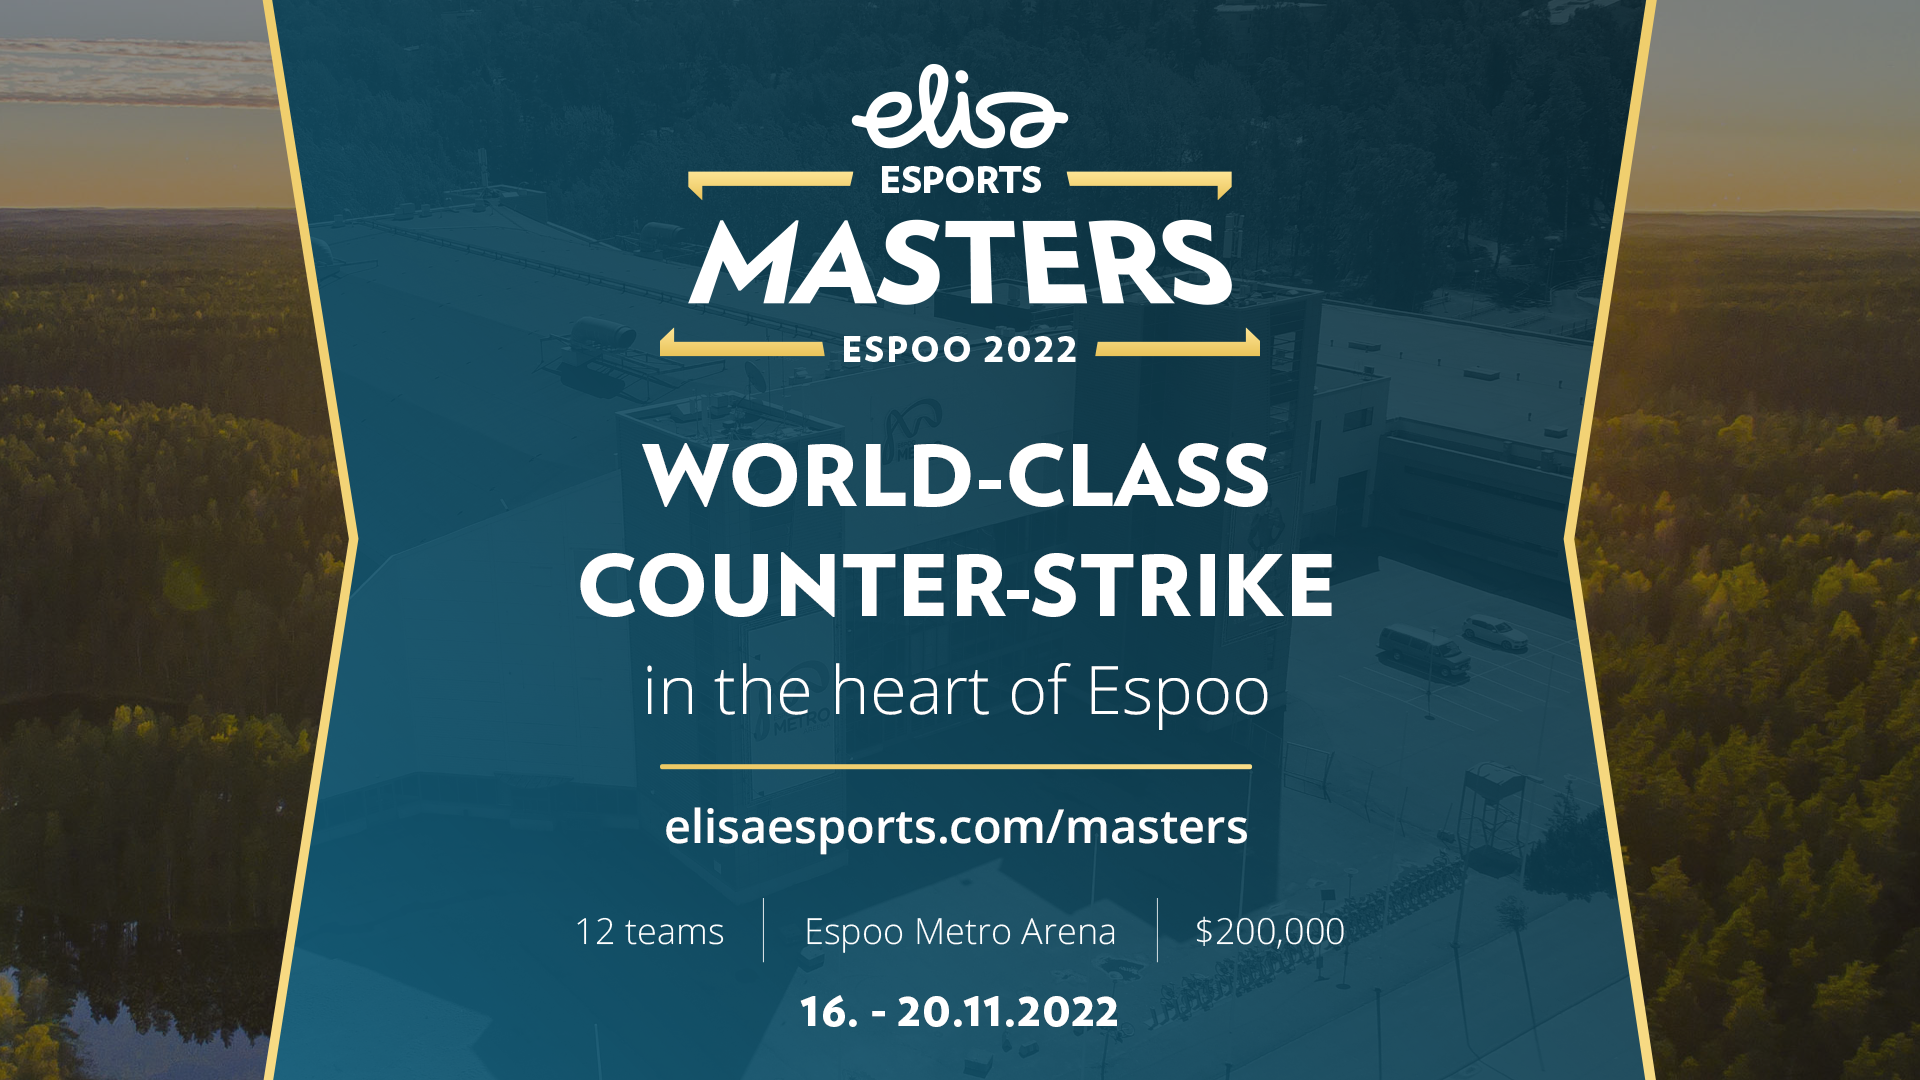 Elisa Masters Espoo 22 is full of activities